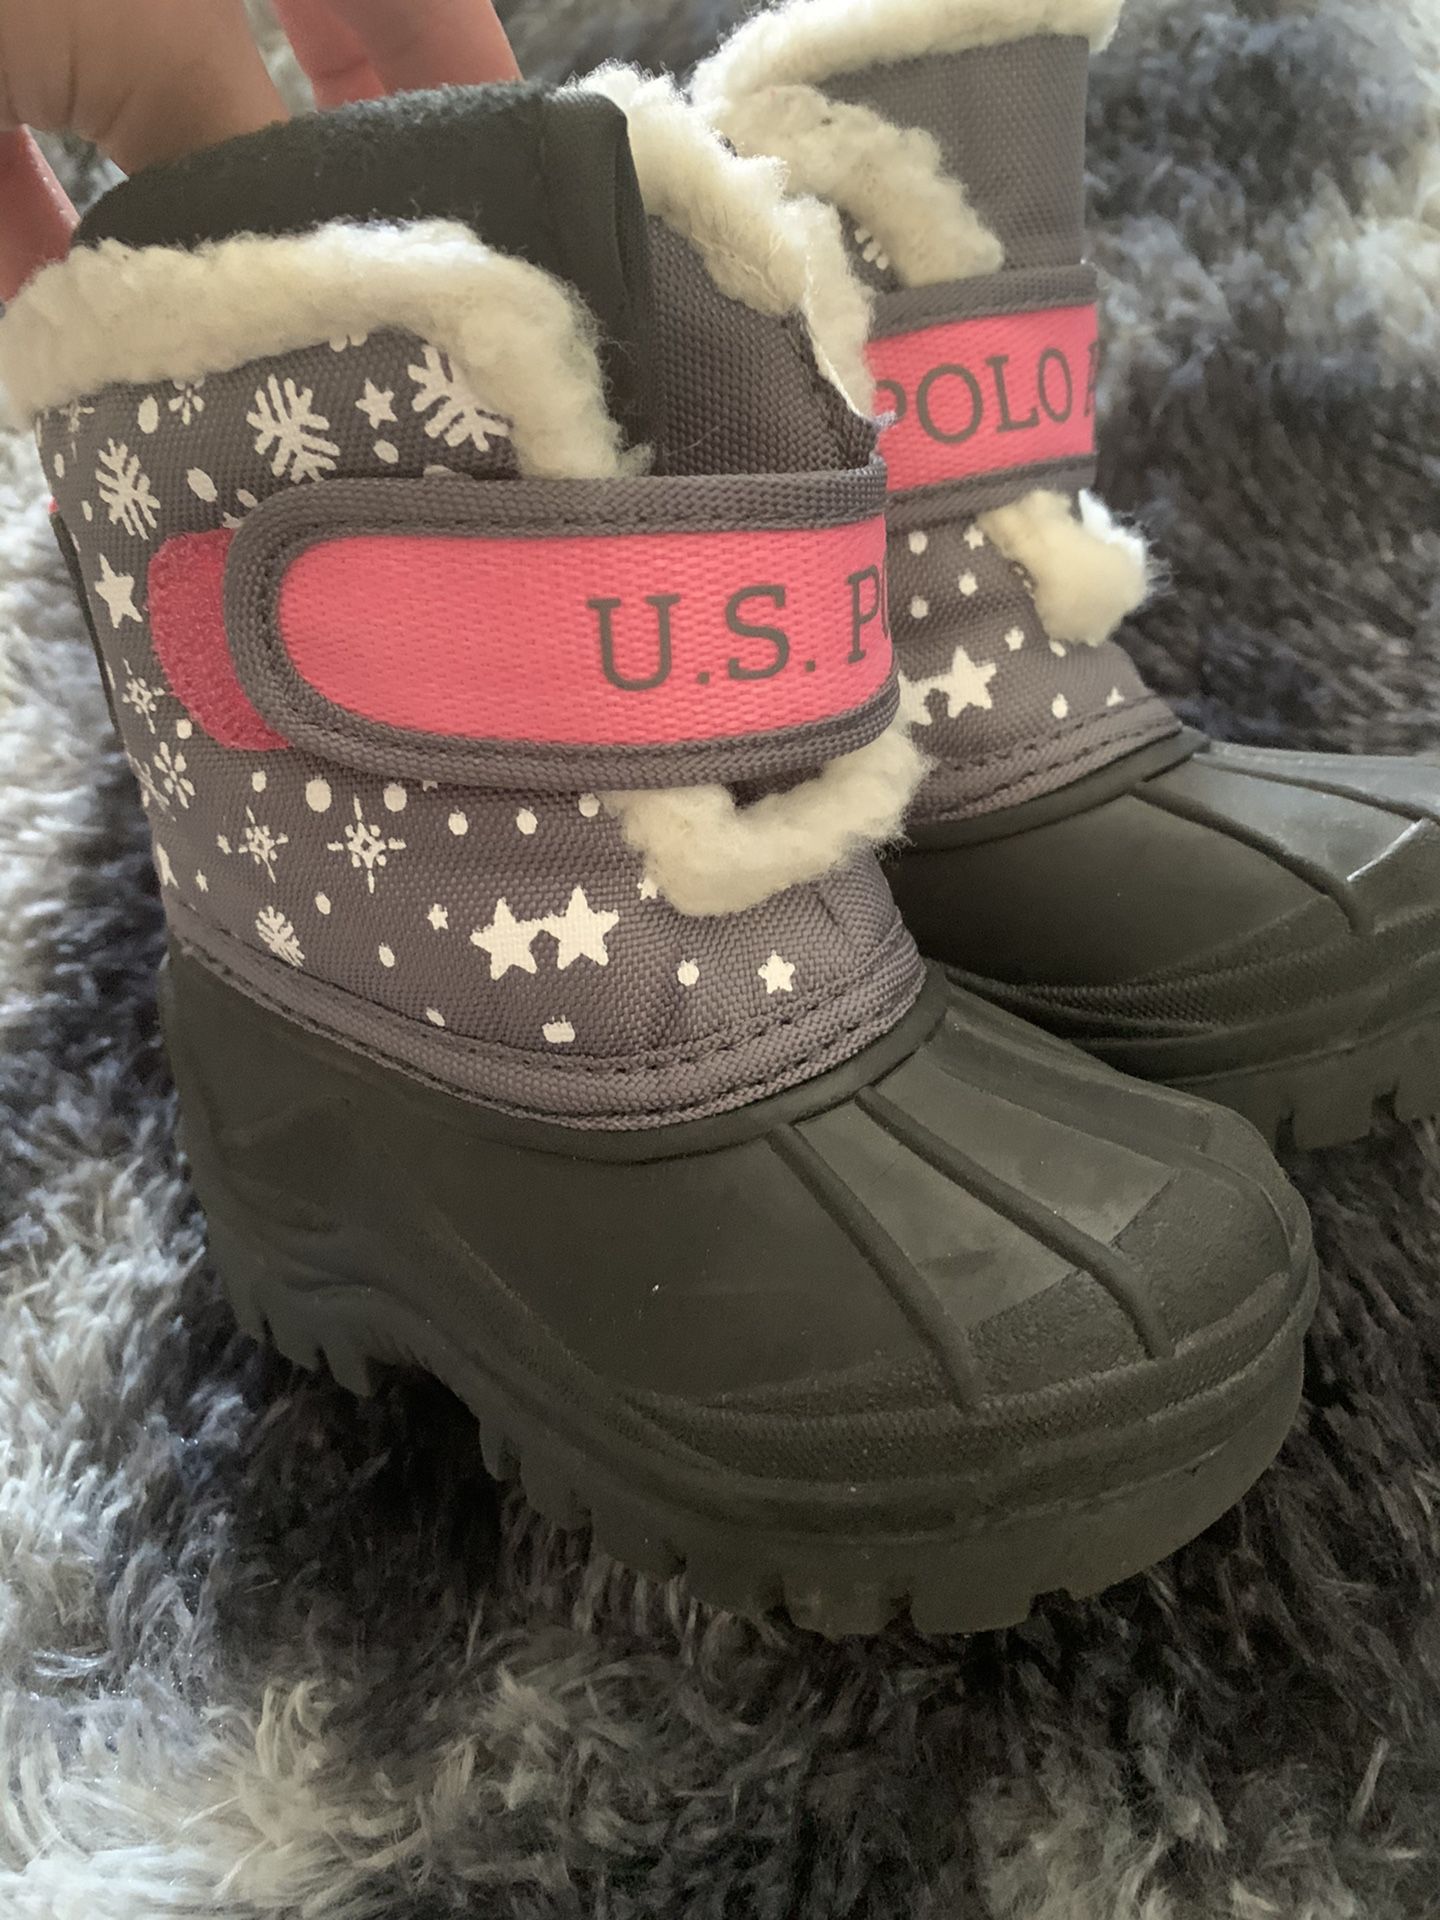 U.S POLO snow boots